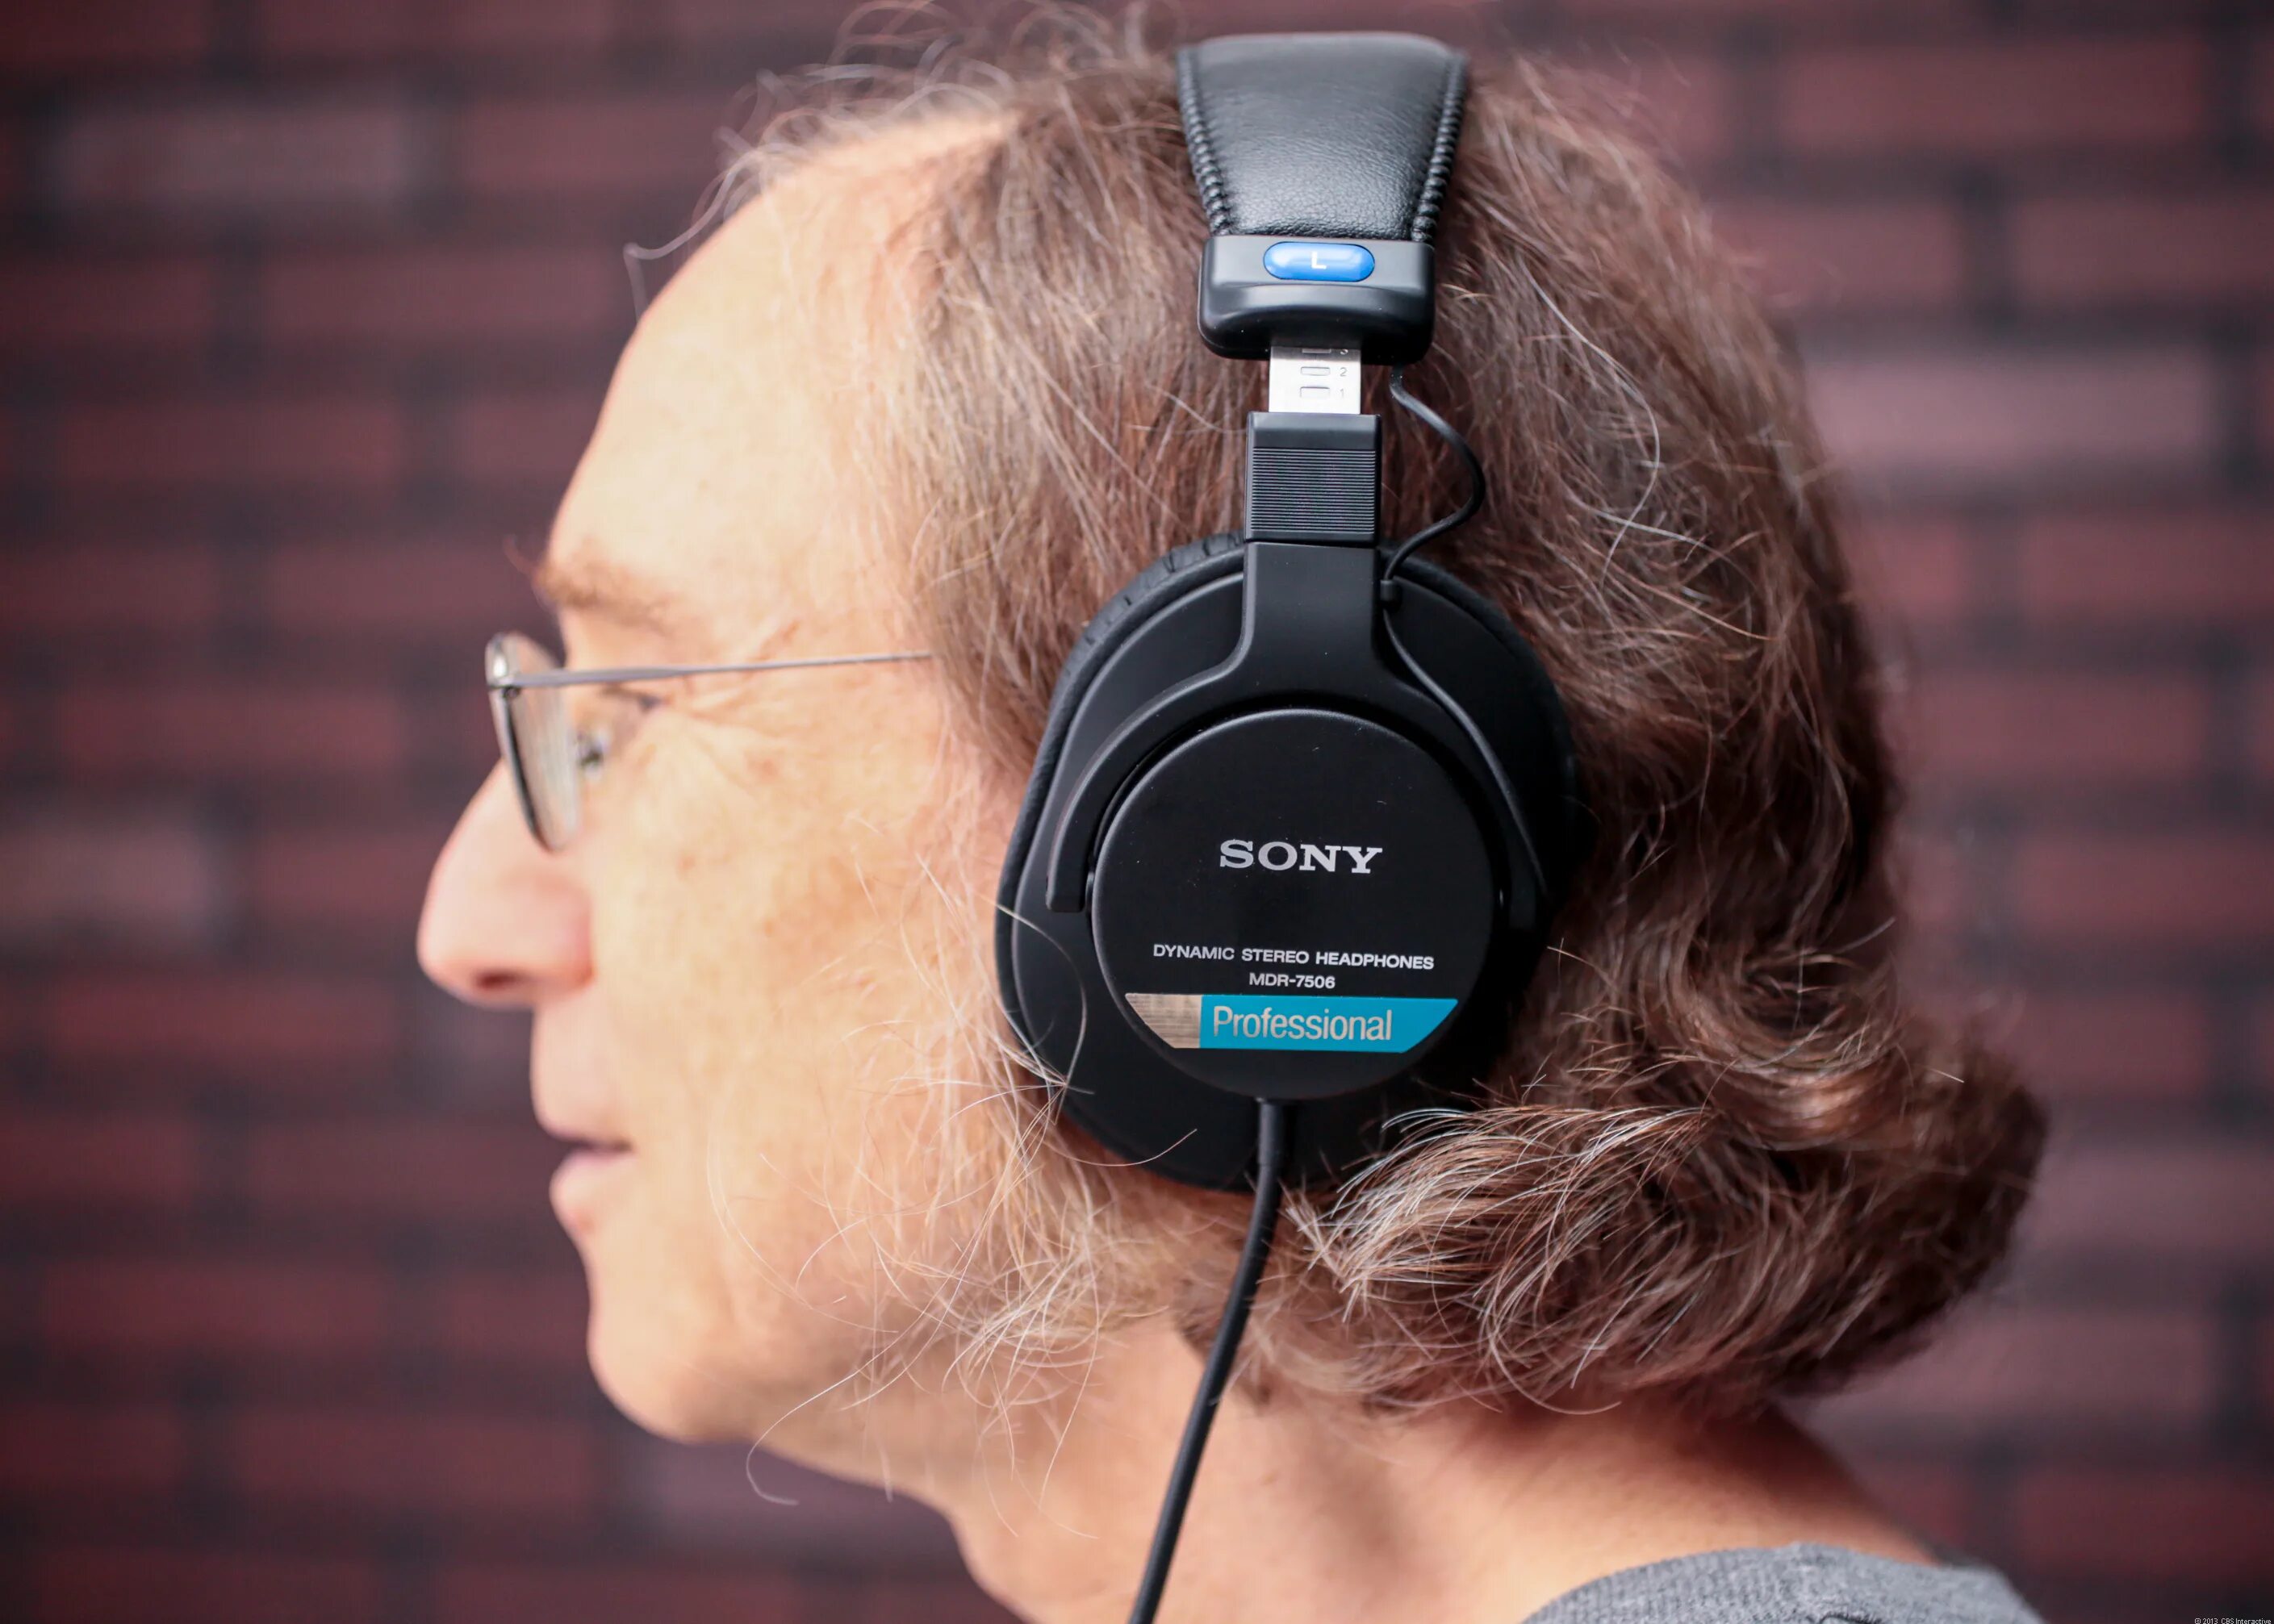 Sony 7506 купить. Sony MDR-7506. Sony MDR-7506 Studio Headphones. Sony professional MDR 7506. Sony Dynamic stereo Headphones MDR-7506.